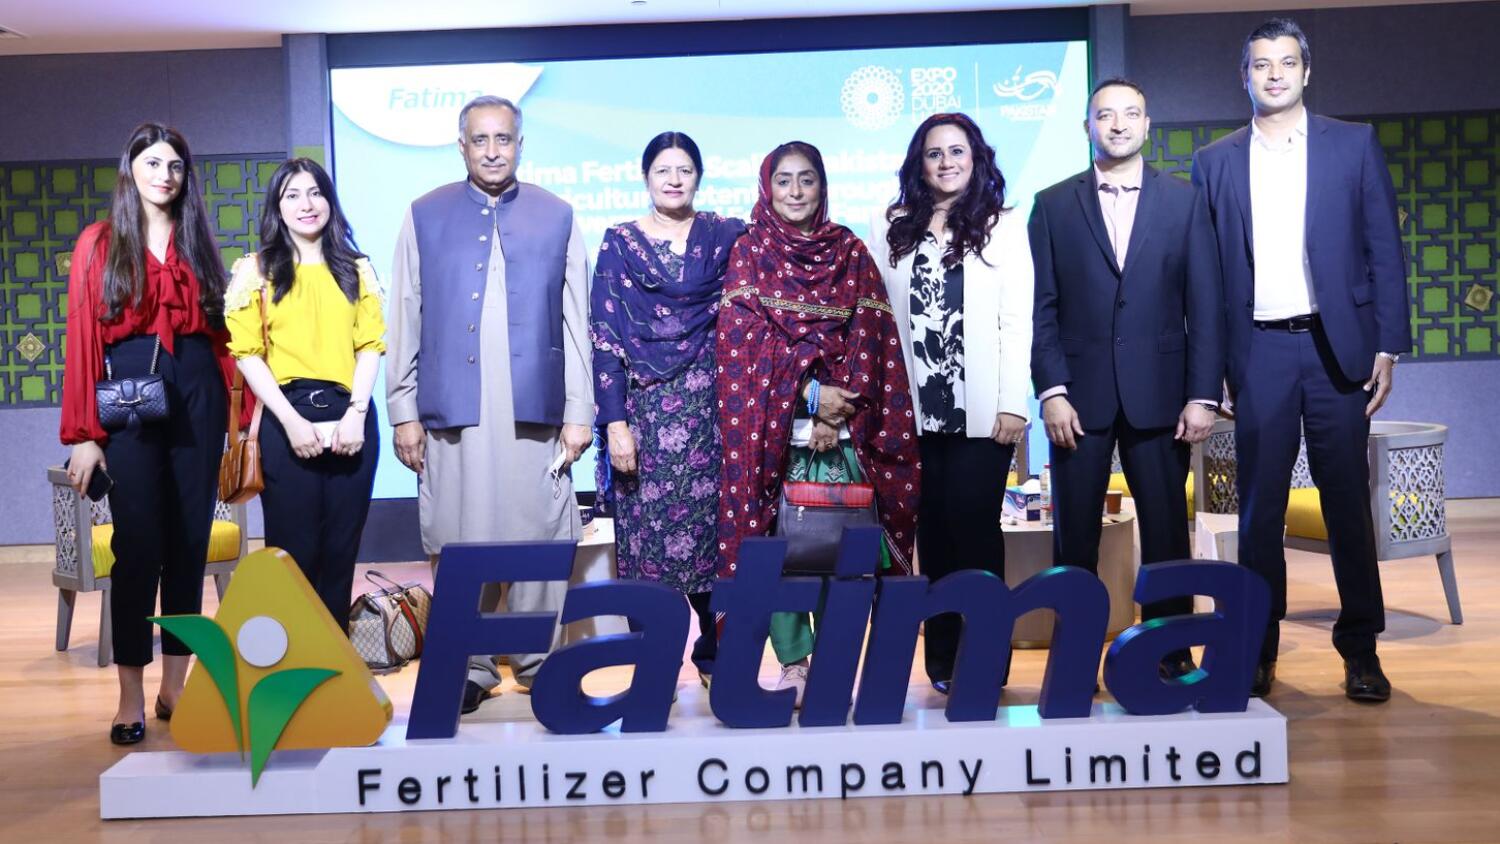 Fatima Fertilizer celebrates exceptionally inspiring Pakistani female farmers at the Expo 2020 Dubai